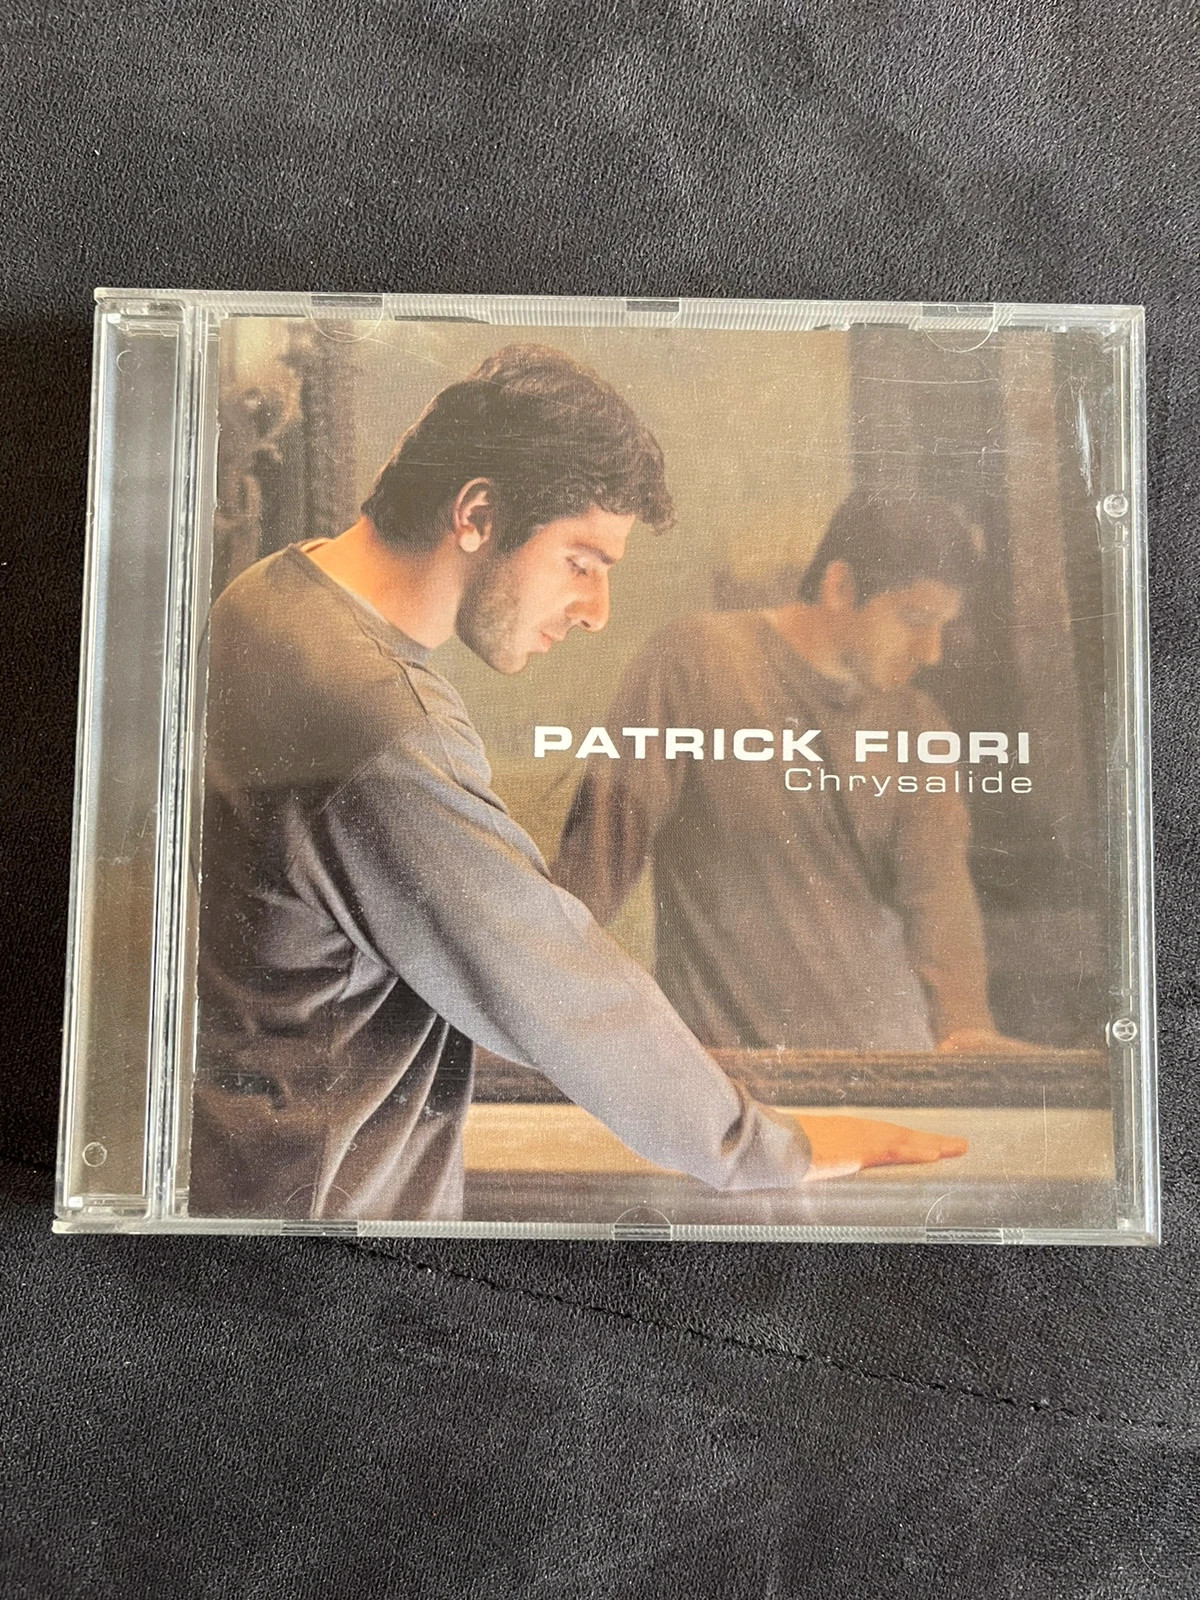 Patrick Fiori music, videos, stats, and photos